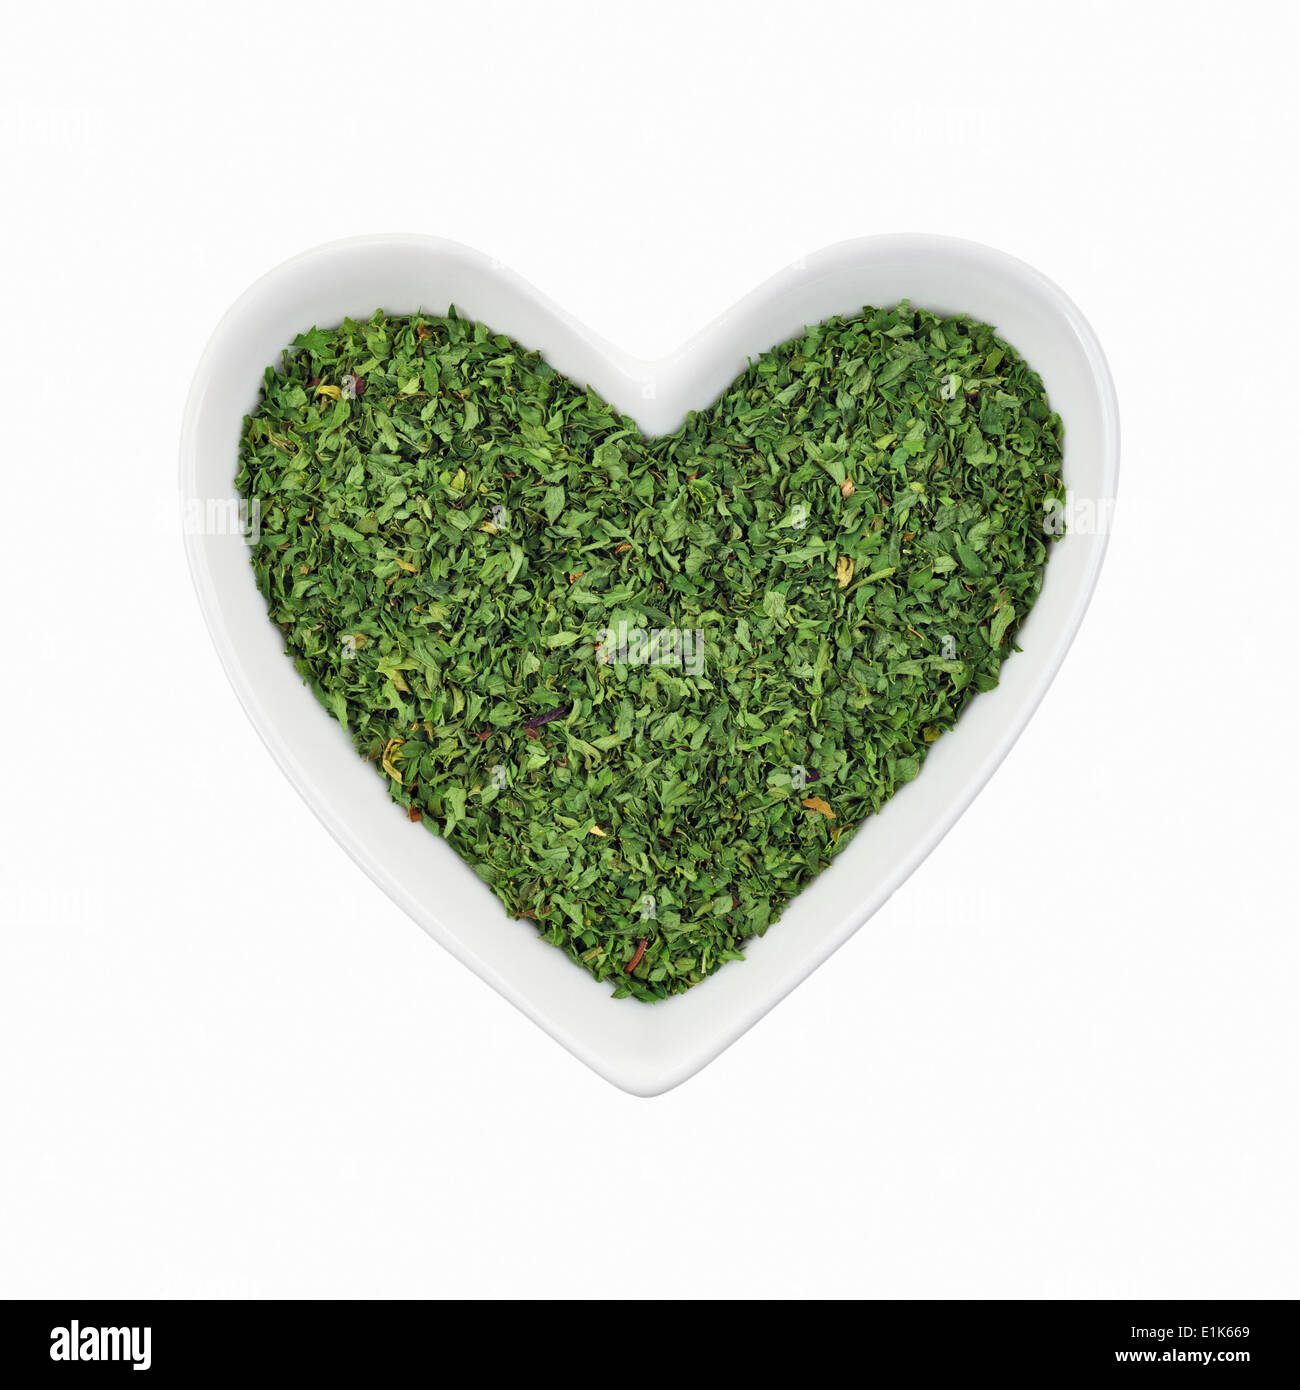 Parsley (Petroselinum crispum) in a heart-shaped dish. Stock Photo